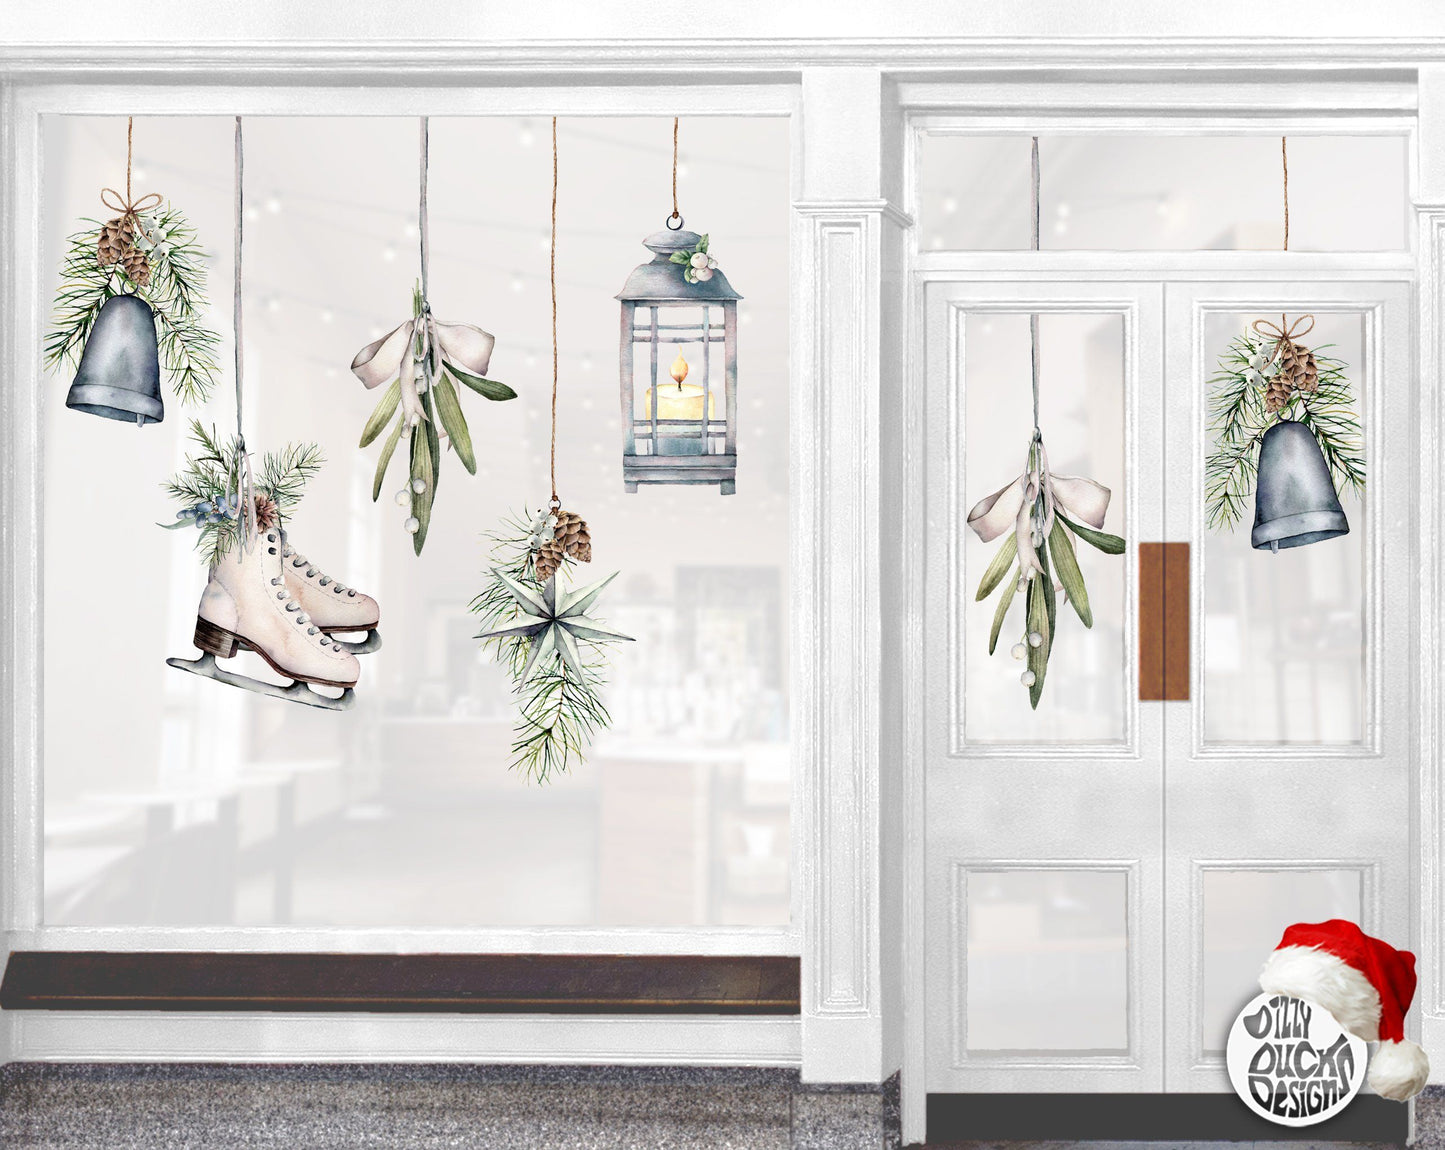 Decal Christmas Bauble Shop Window Decals - White Dizzy Duck Designs